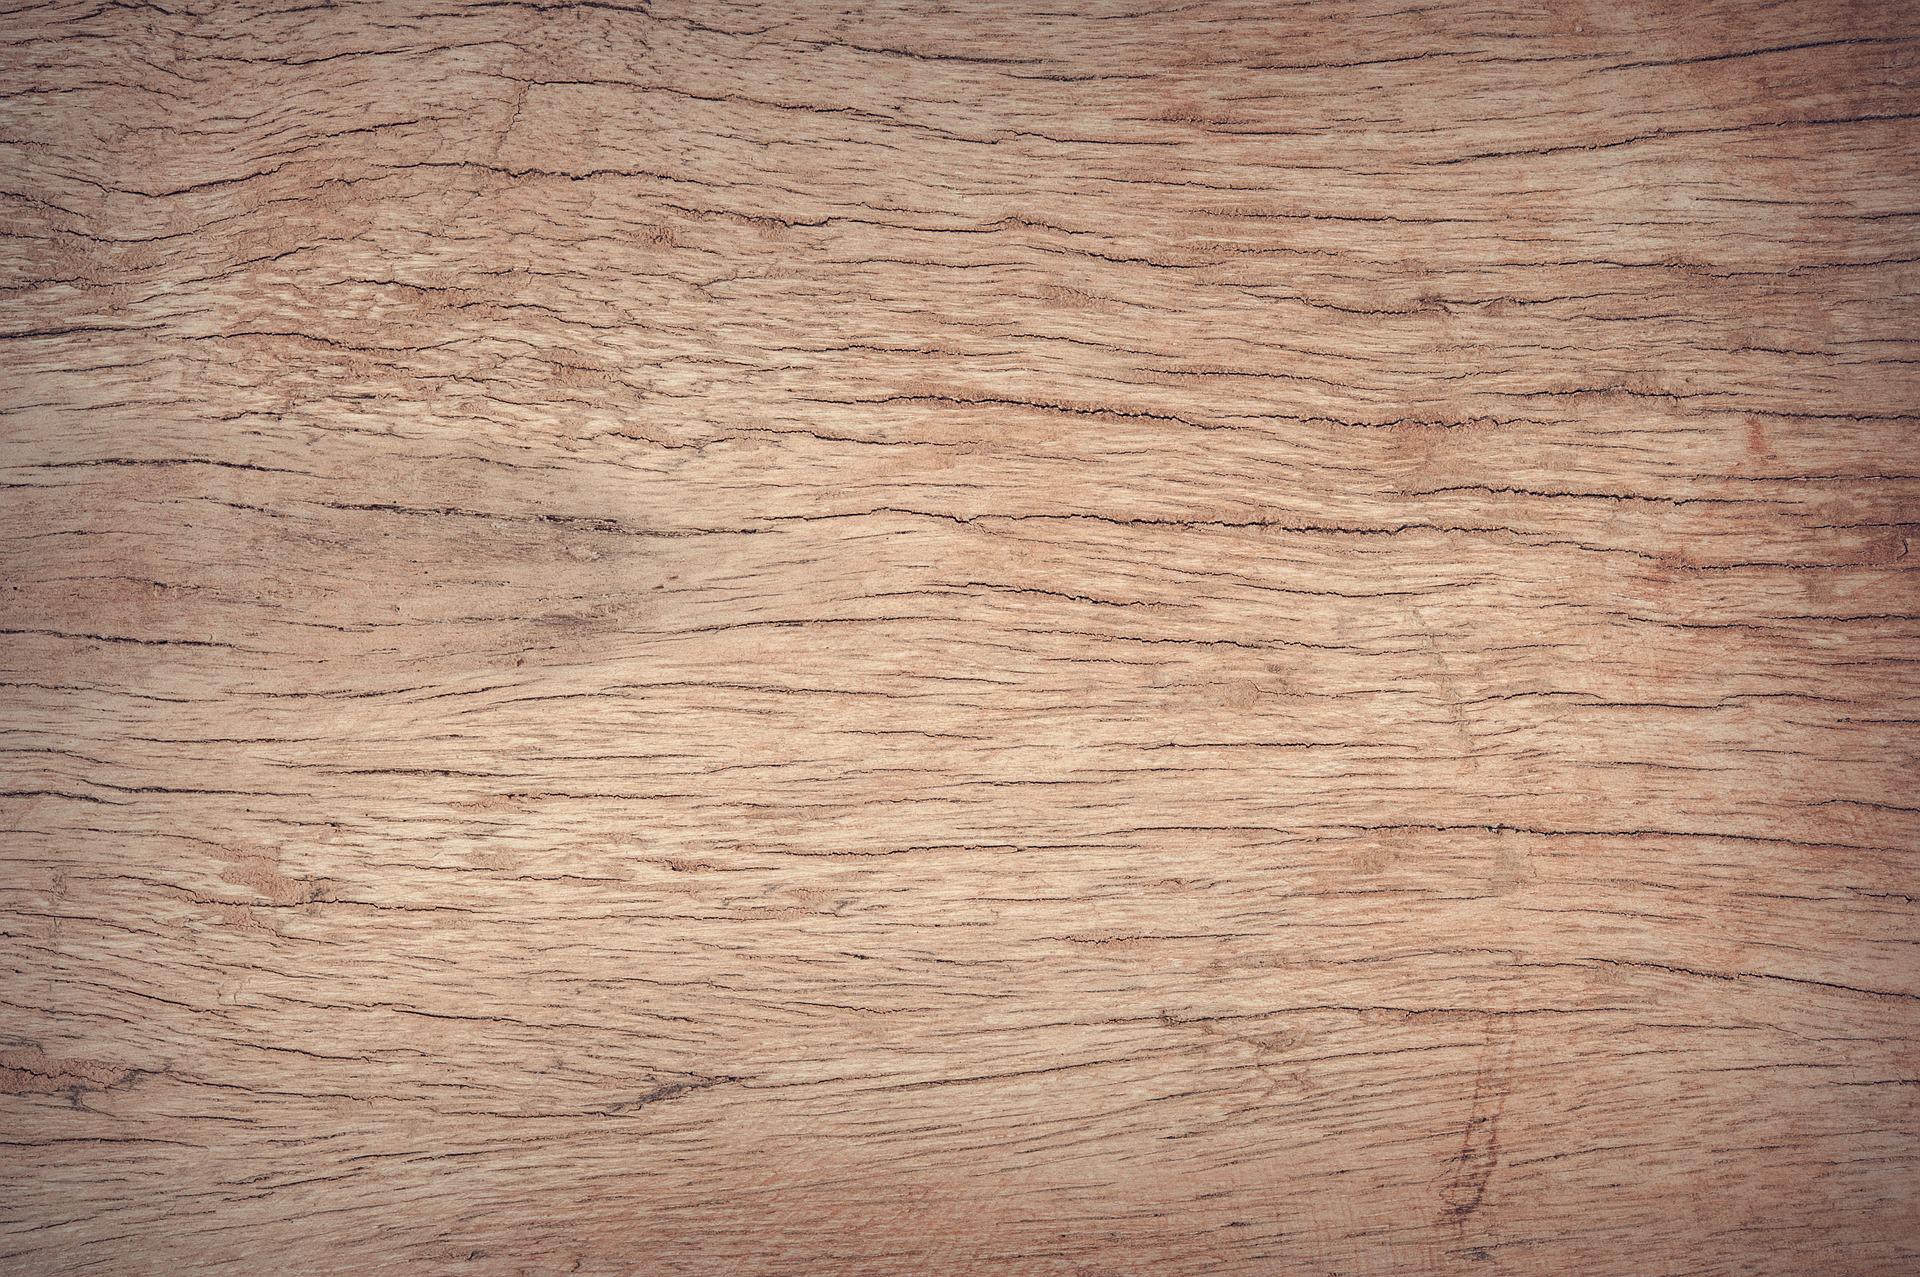 an image of oak flooring
